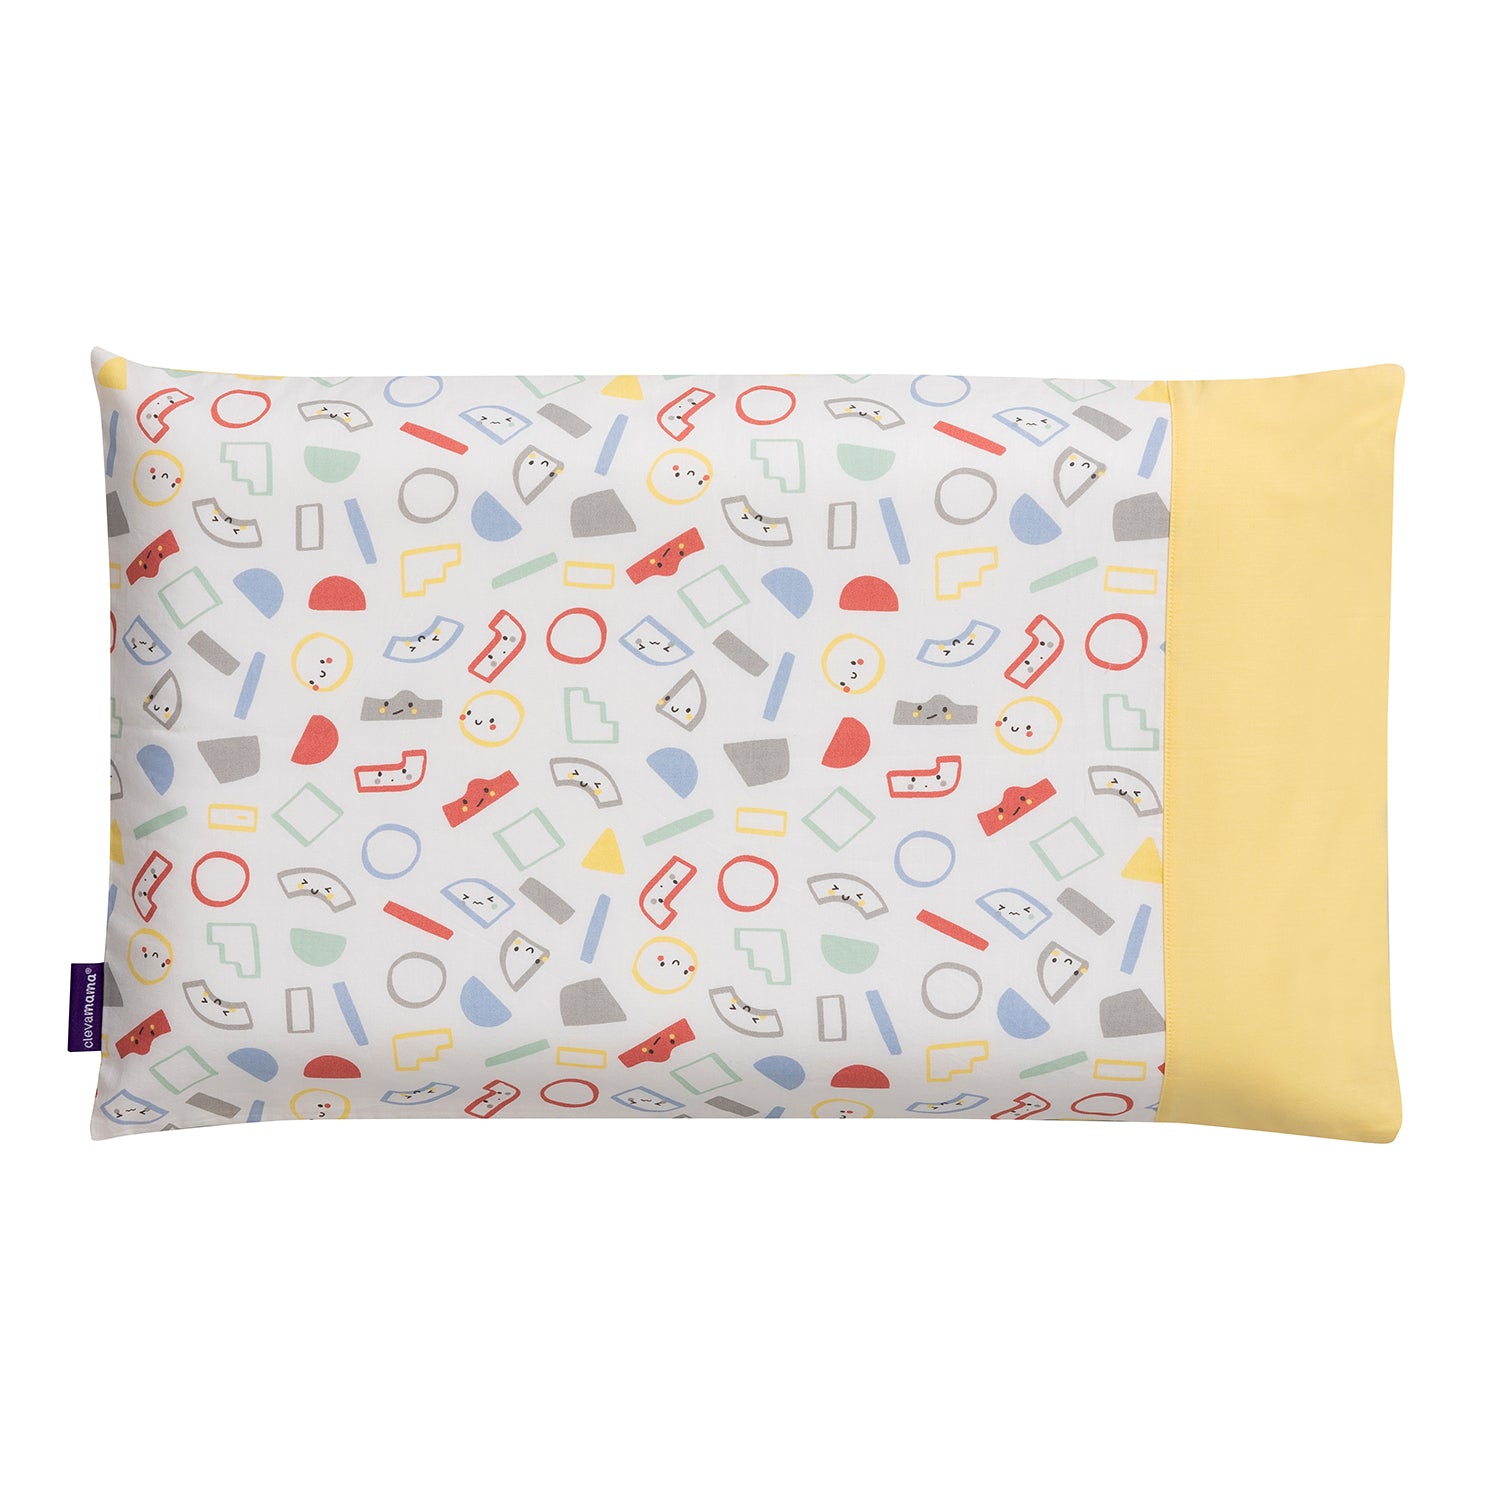 ClevaFoam Baby Pillow Case (Grey/Yellow)